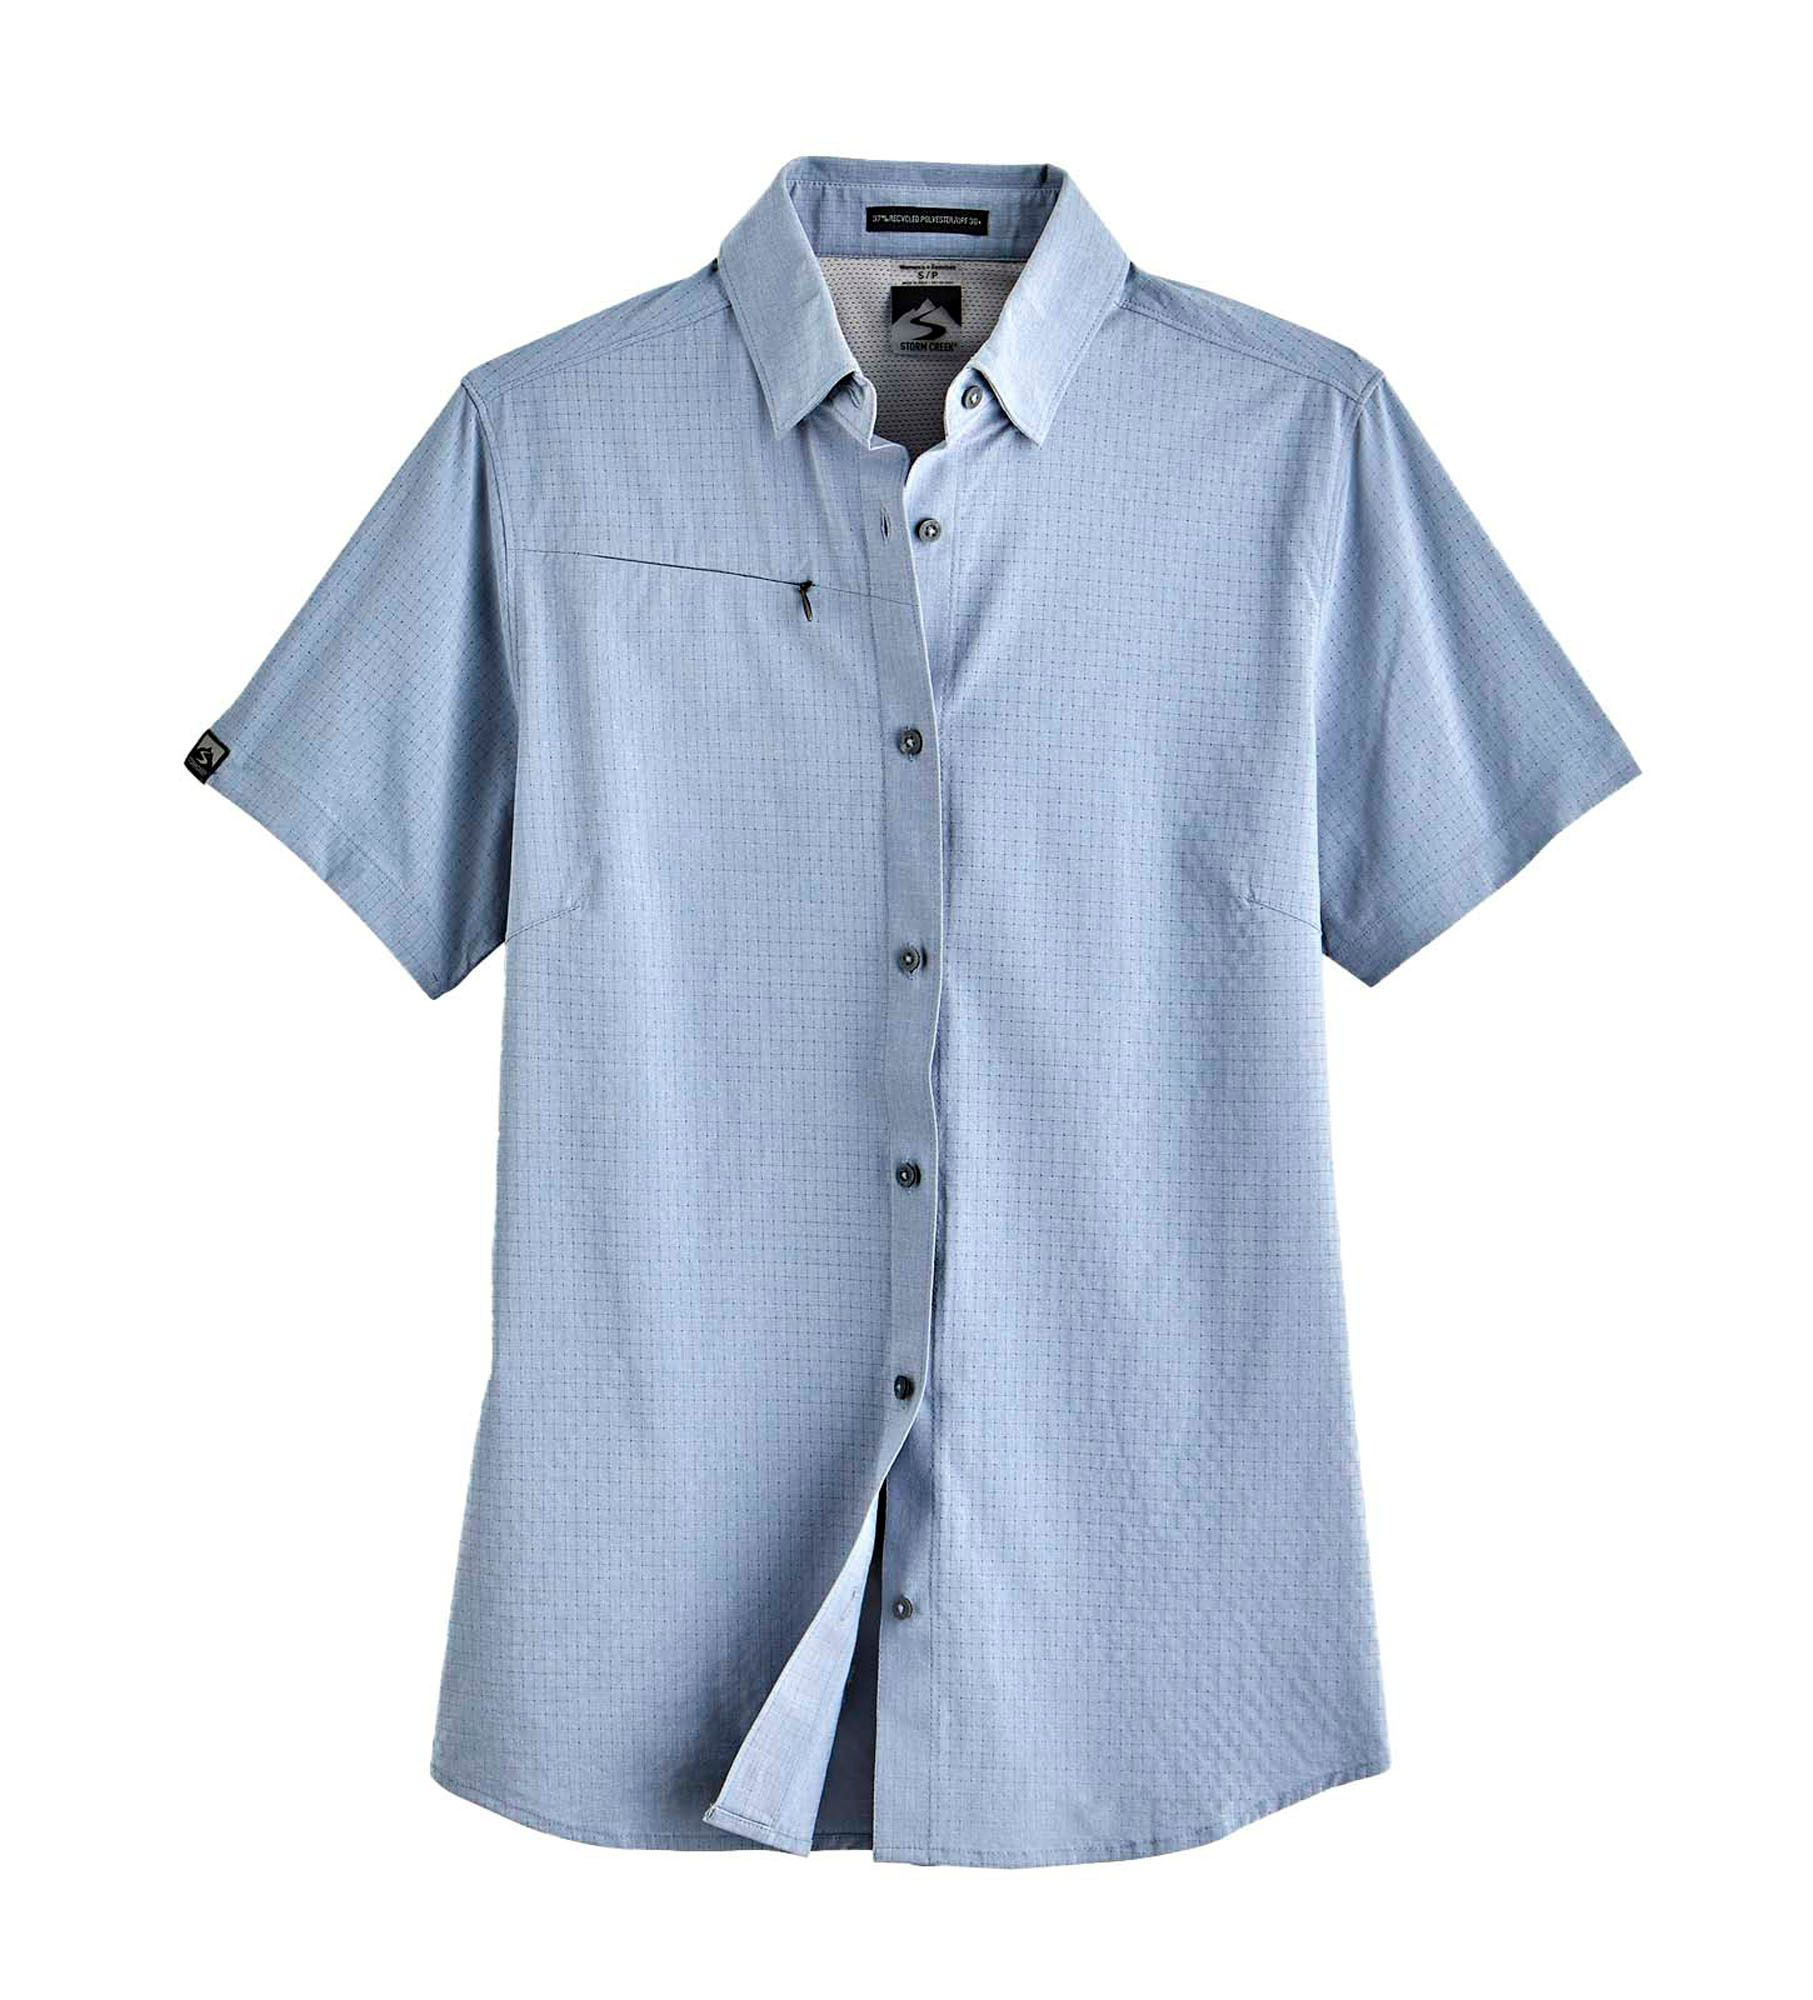 Storm Creek Naturalist Short-Sleeve Shirt for Ladies - Blue Mist - L